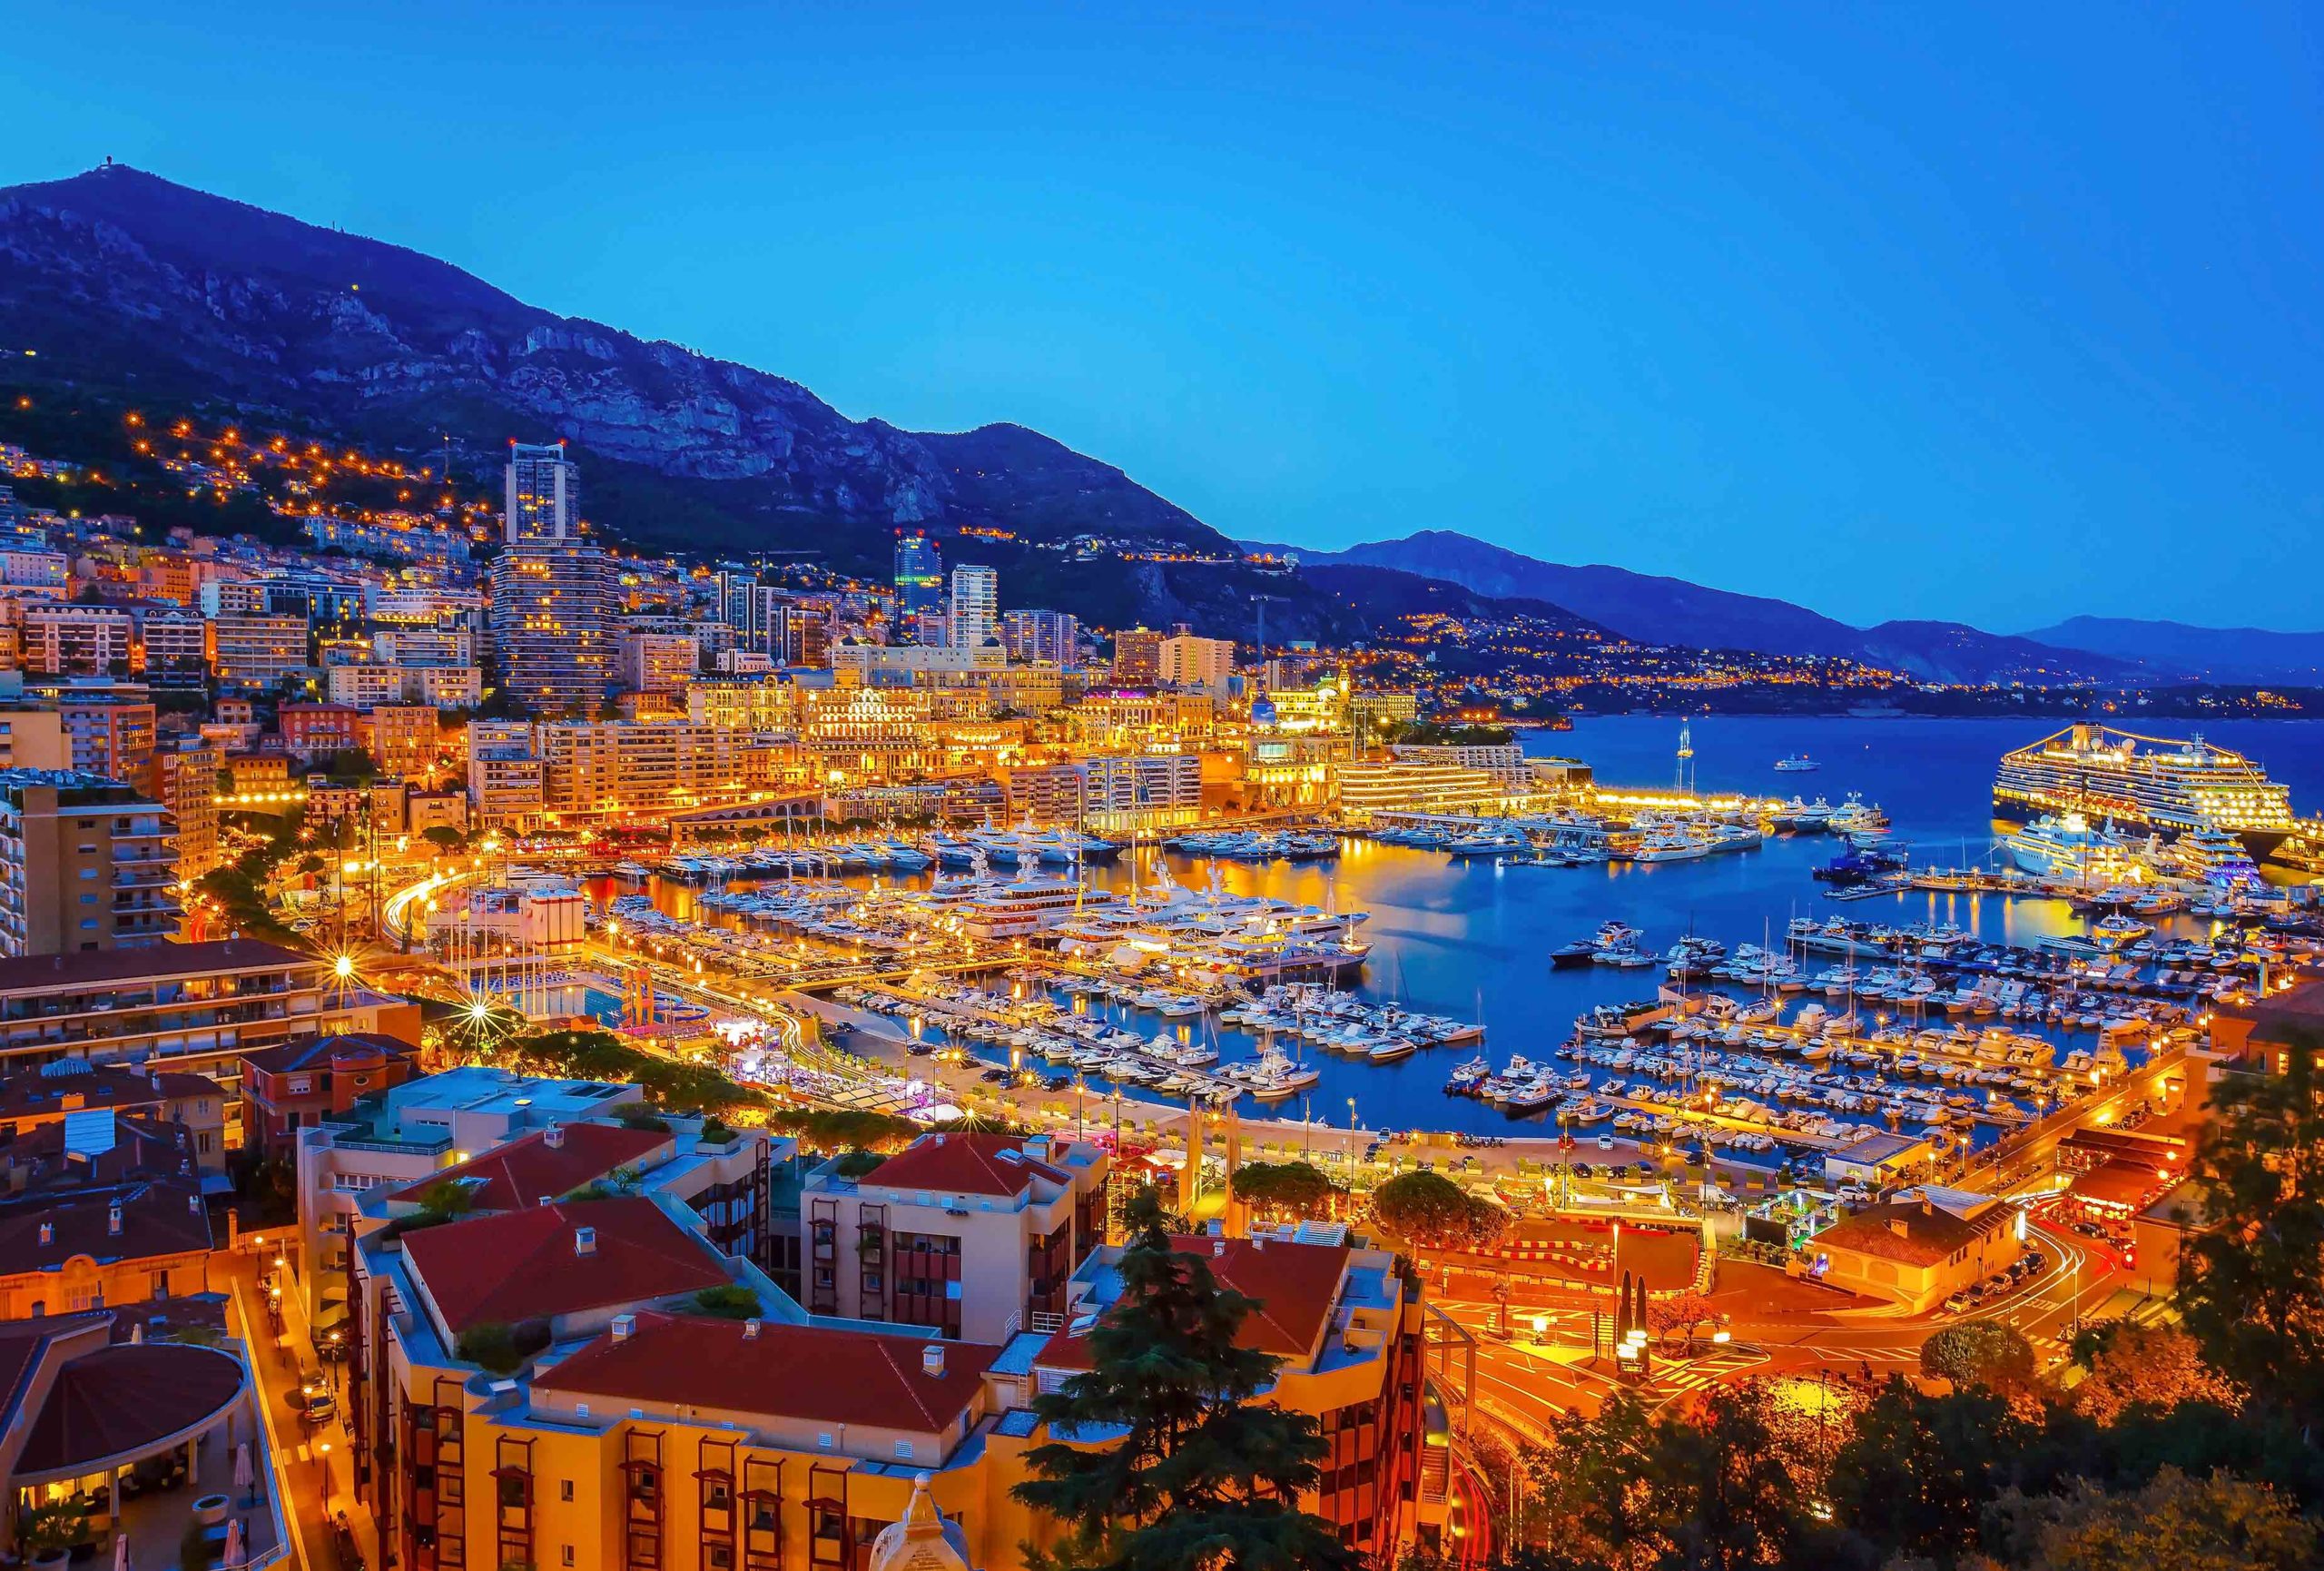 The Principality of Monaco by night @kityyaya via Twenty20